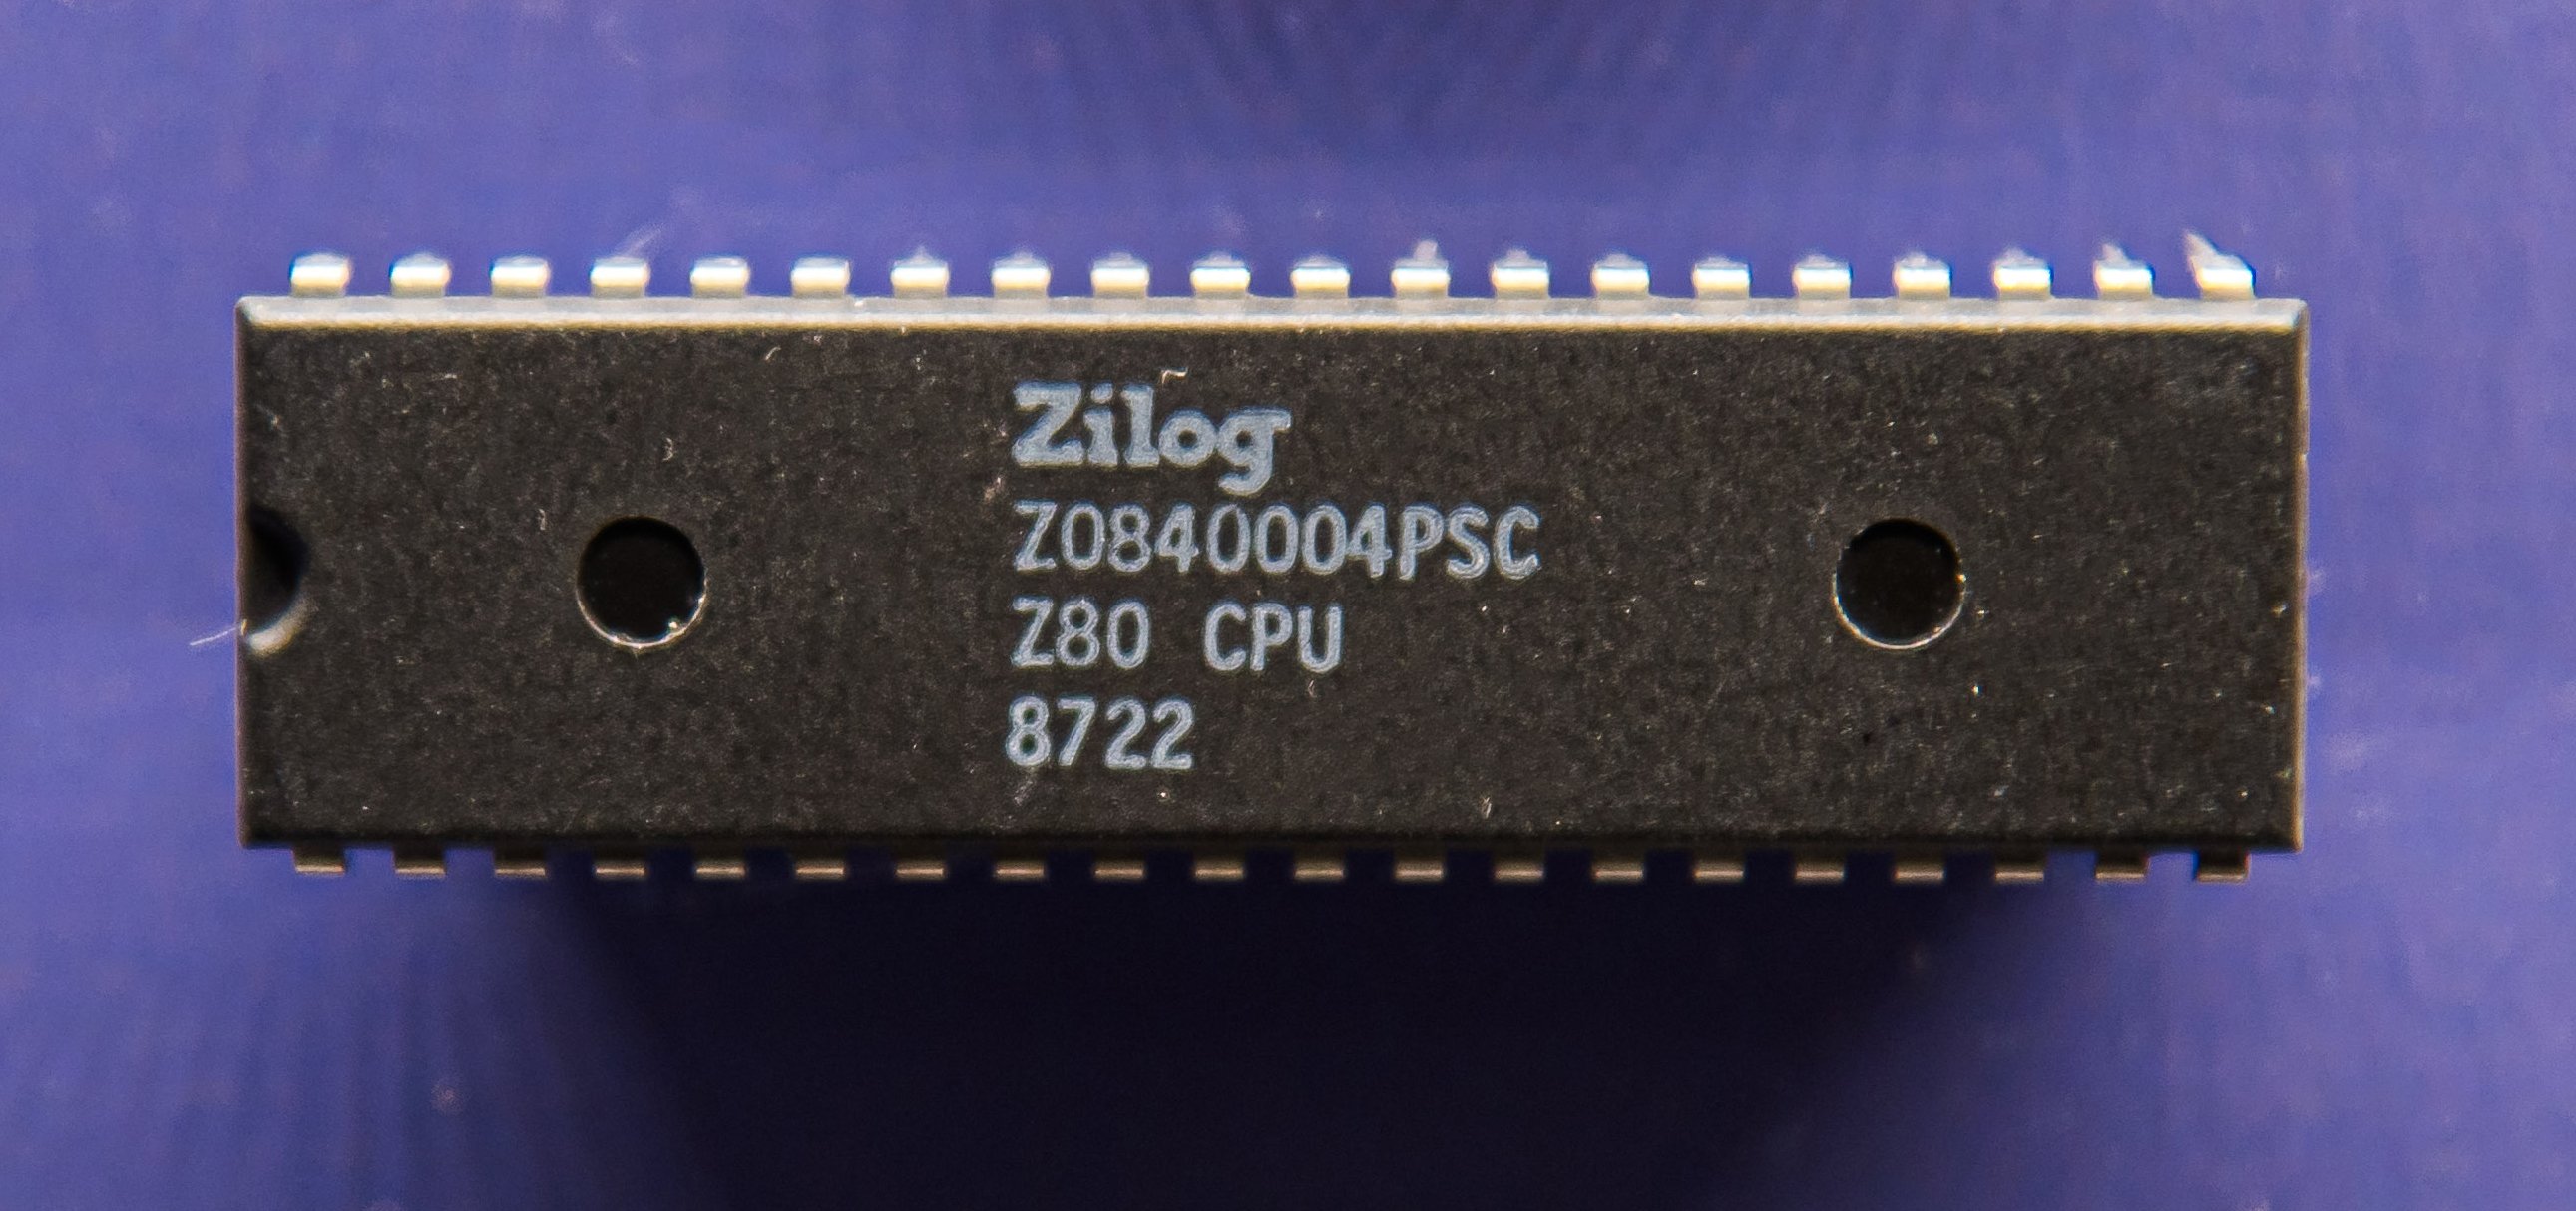 Zilog Z80 CPU (Heinz Nixdorf MuseumsForum CC BY-NC-SA)